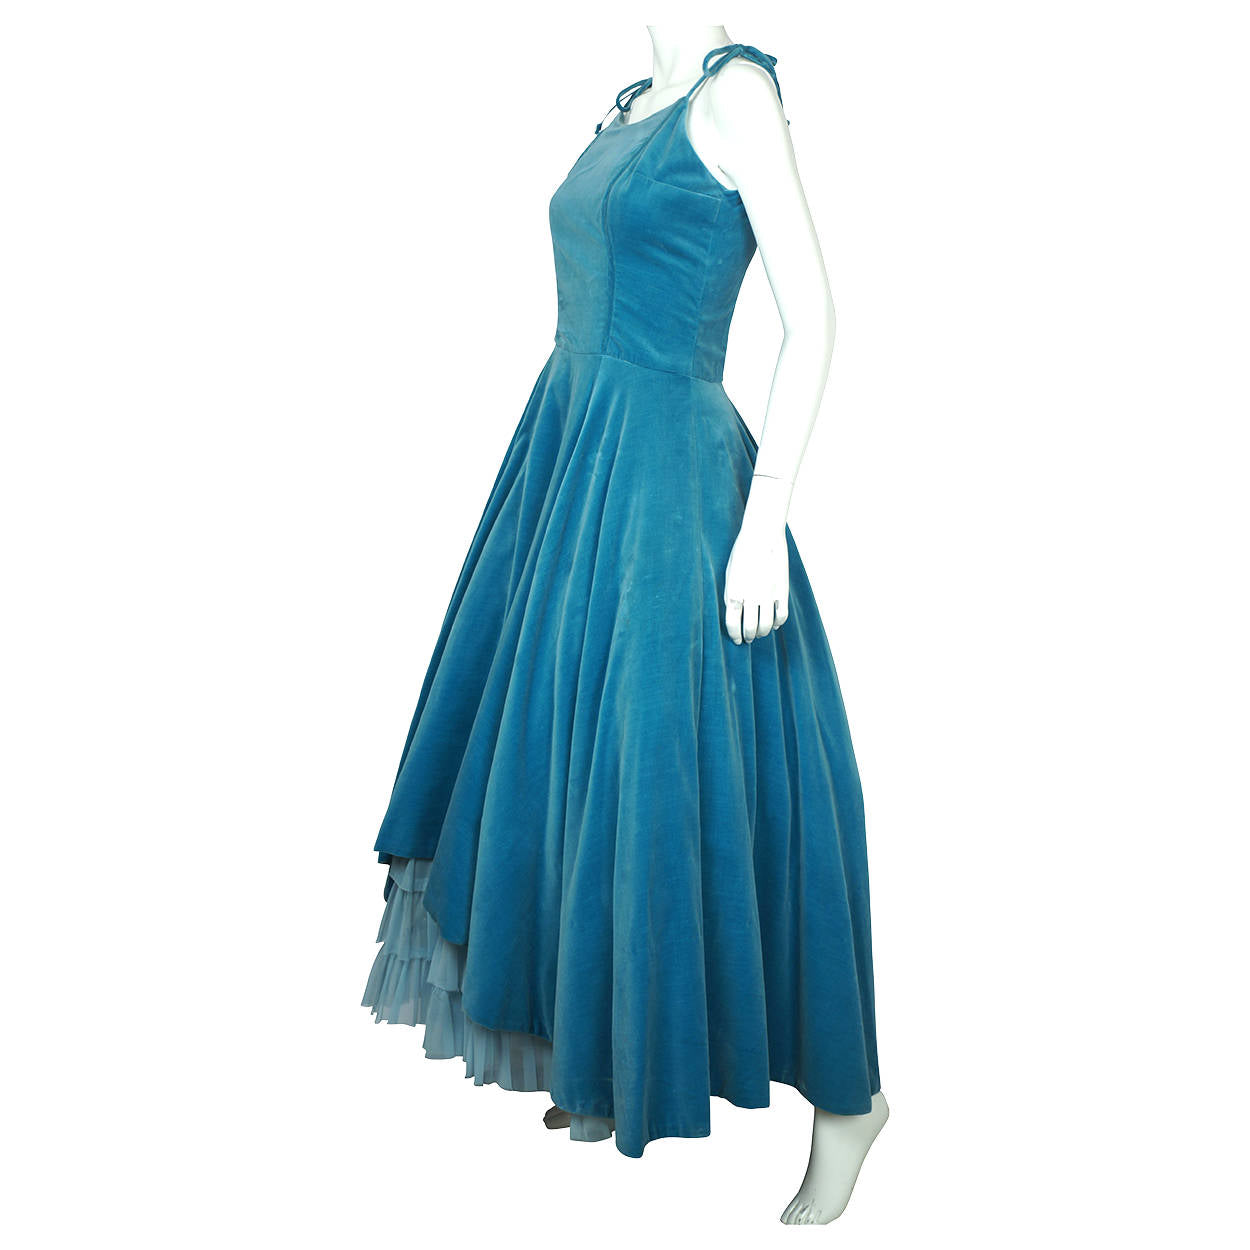 Vintage 1950s Velvet Ball Gown Formal Dress with Tulle Bottom Size M